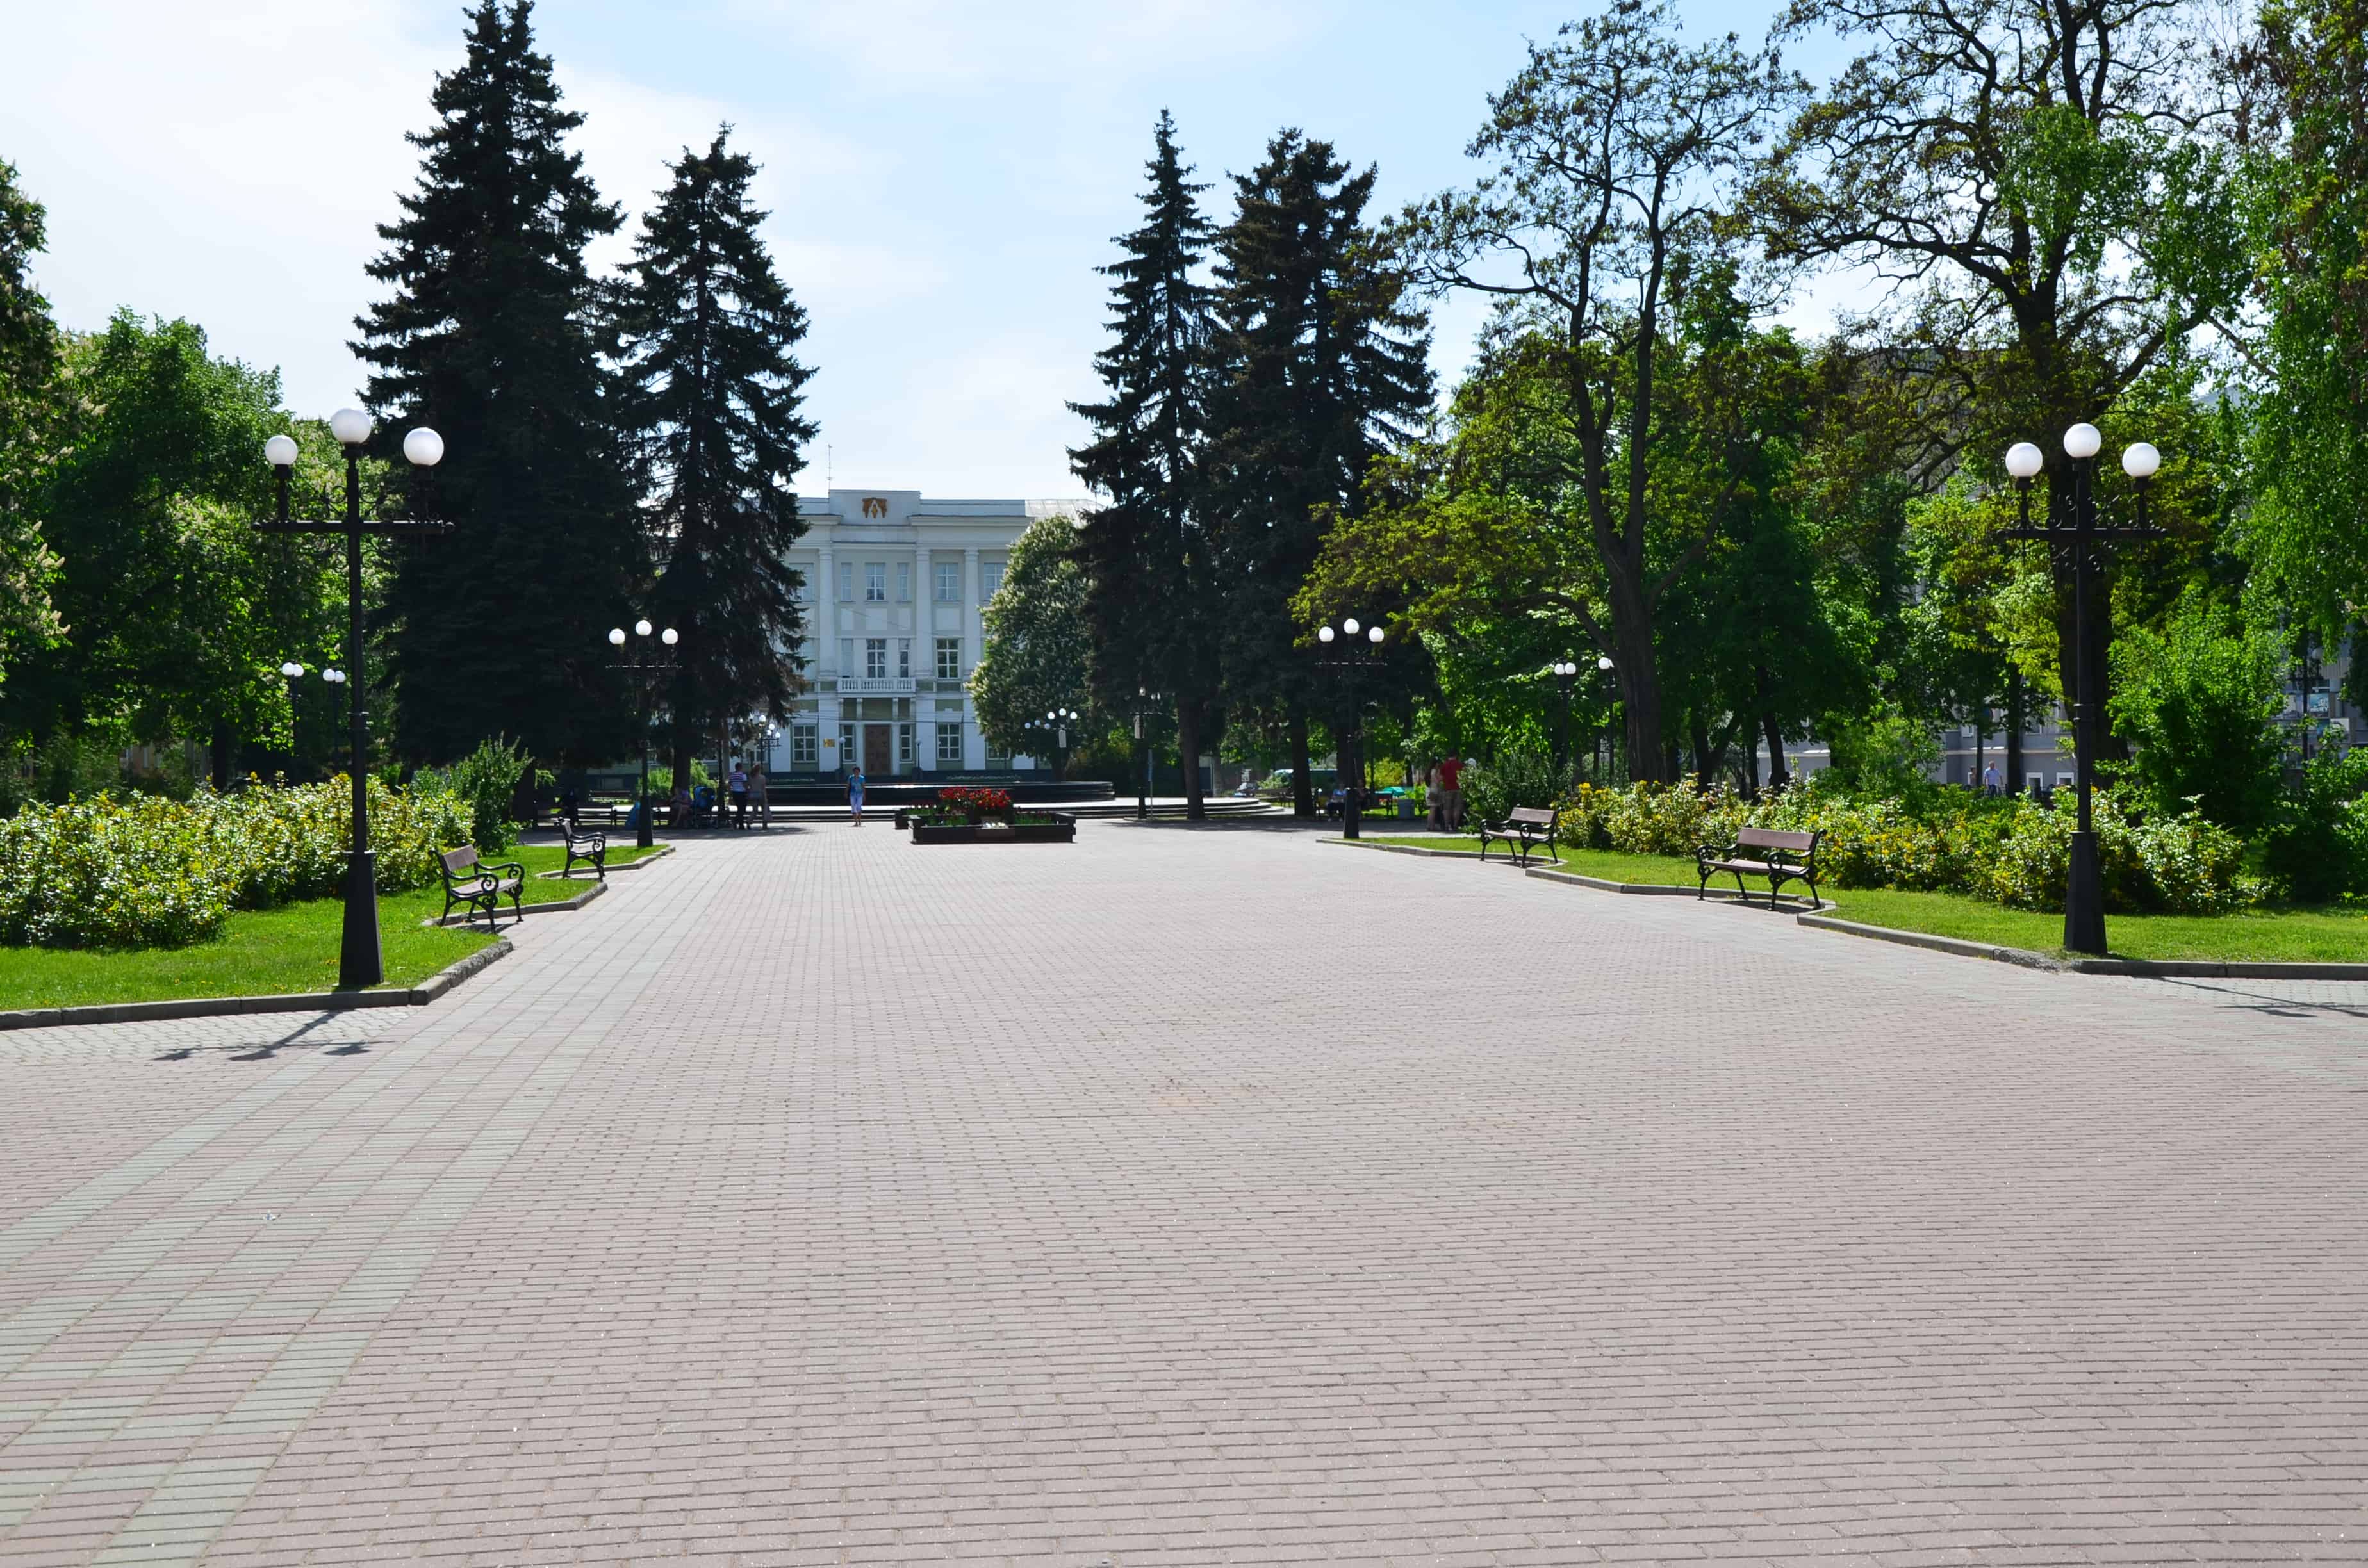 Popudrenko Public Garden in Chernihiv, Ukraine